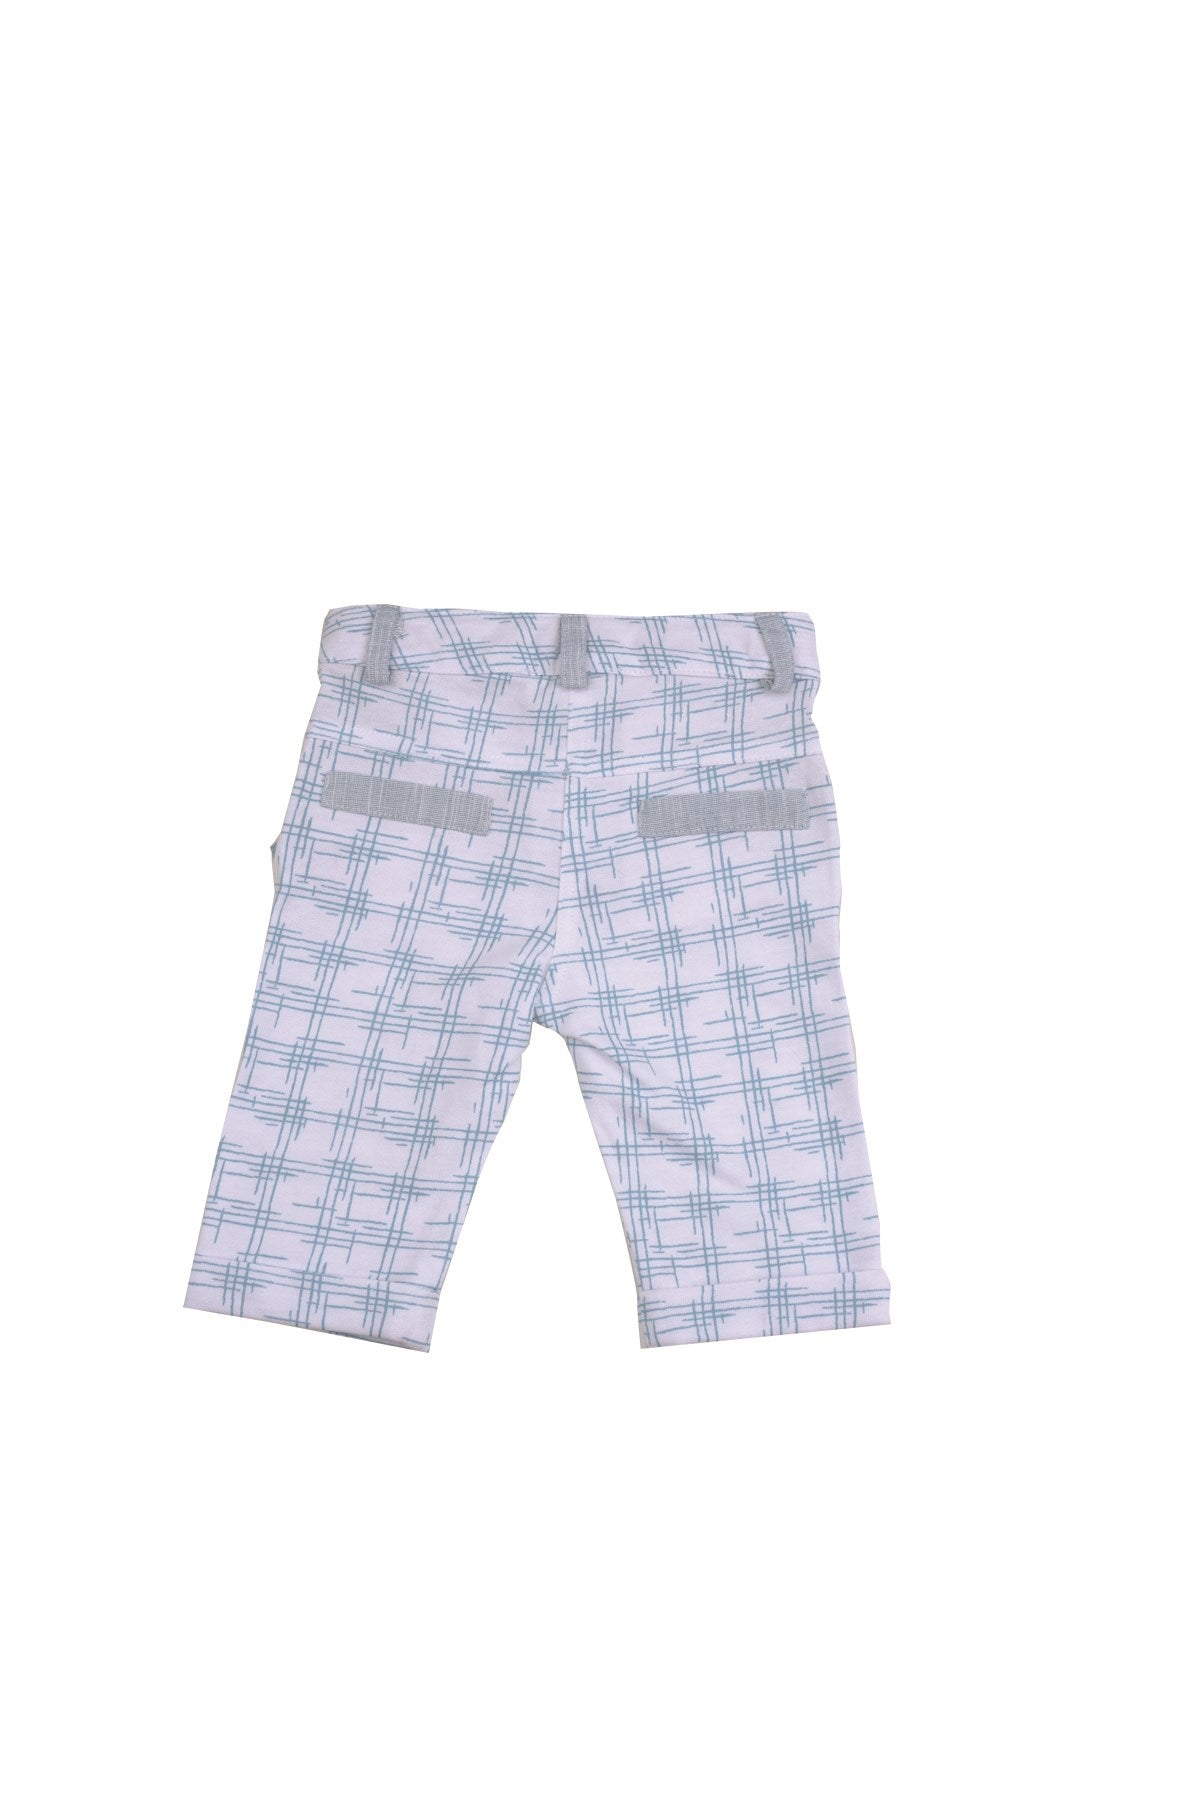 Kız Bebek Yeşil Çizgili Pantolon (6ay-4yaş)-1